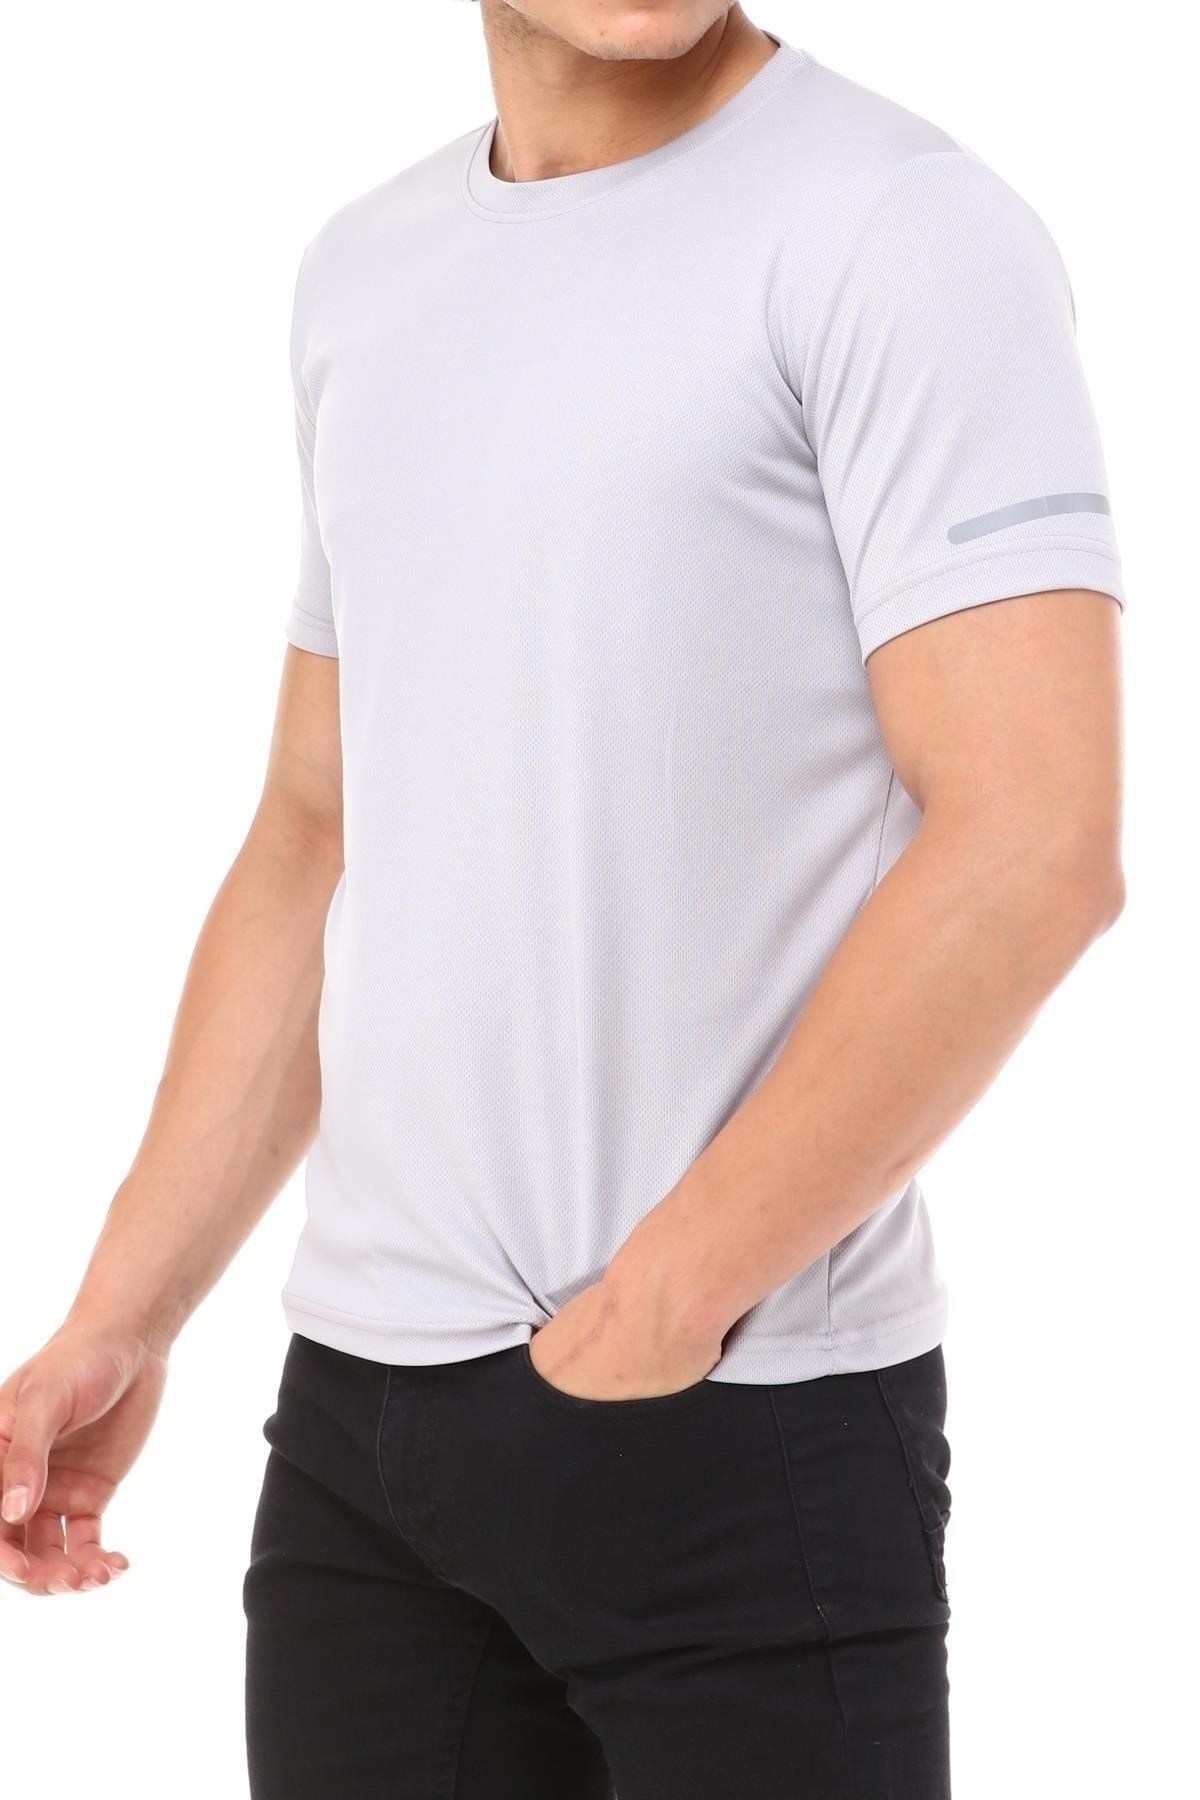 Ghassy Co Erkek Nem Emici Hızlı Kuruma Atletik Teknik Performans T-shirt